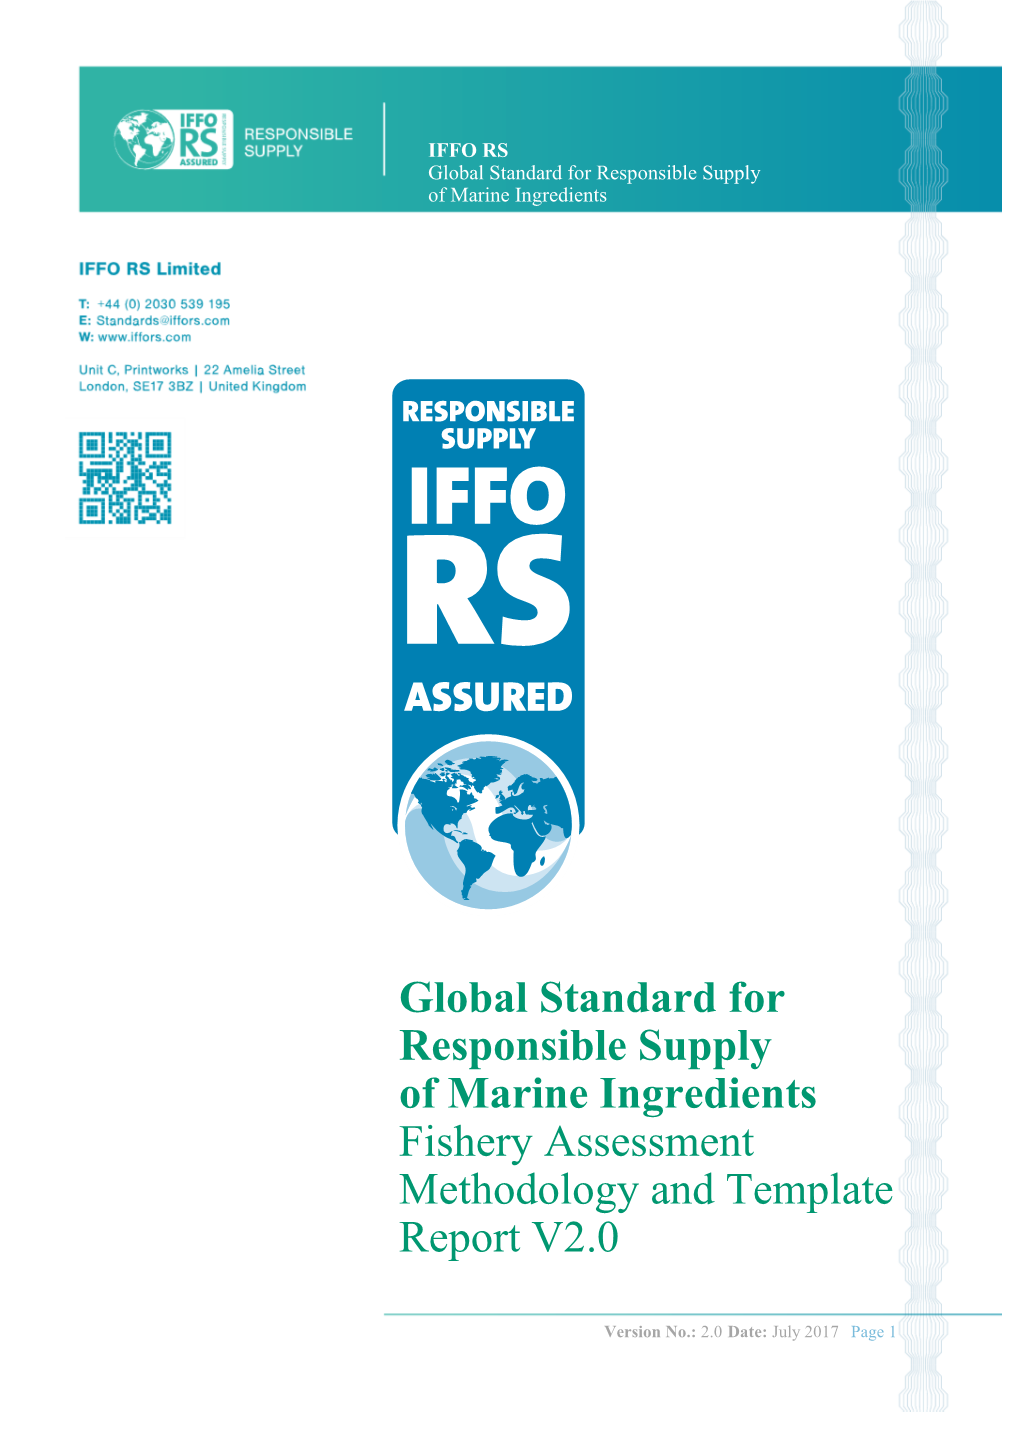 Global Standard for Responsible Supply of Marine Ingredients